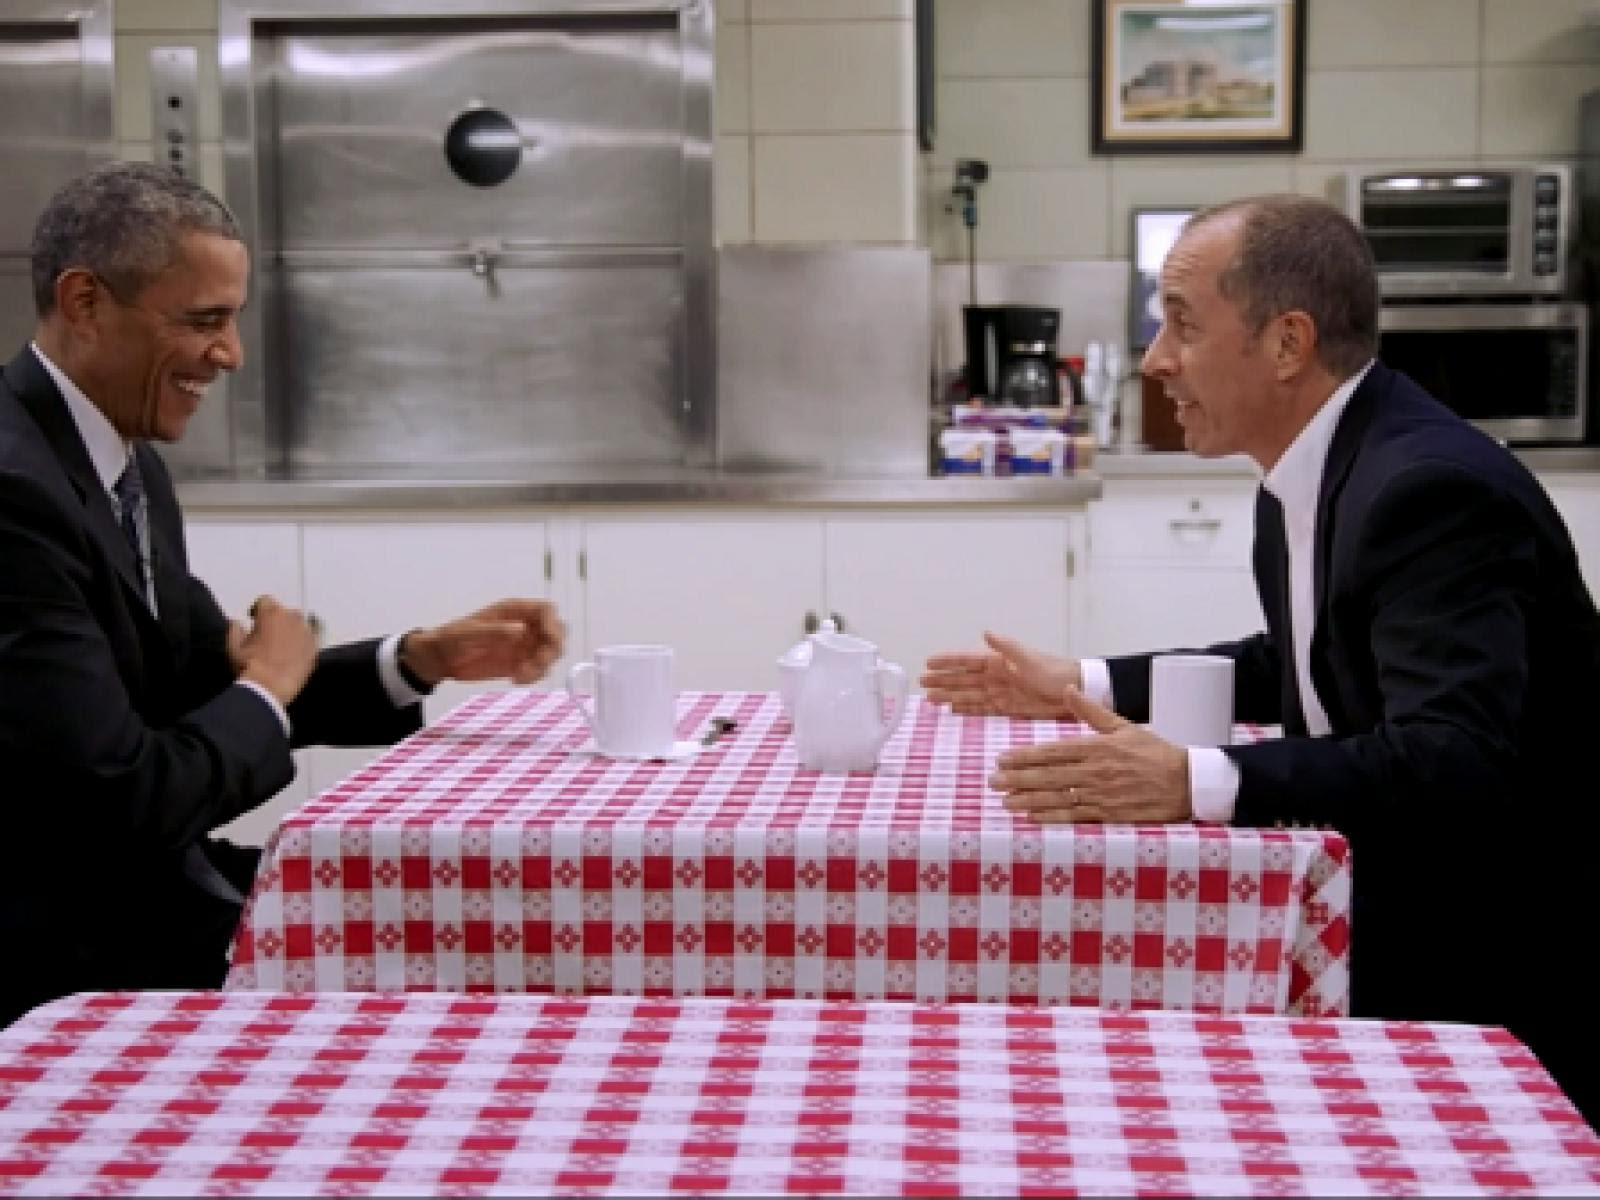 Jerry Seinfeld interviewed Barack Obama